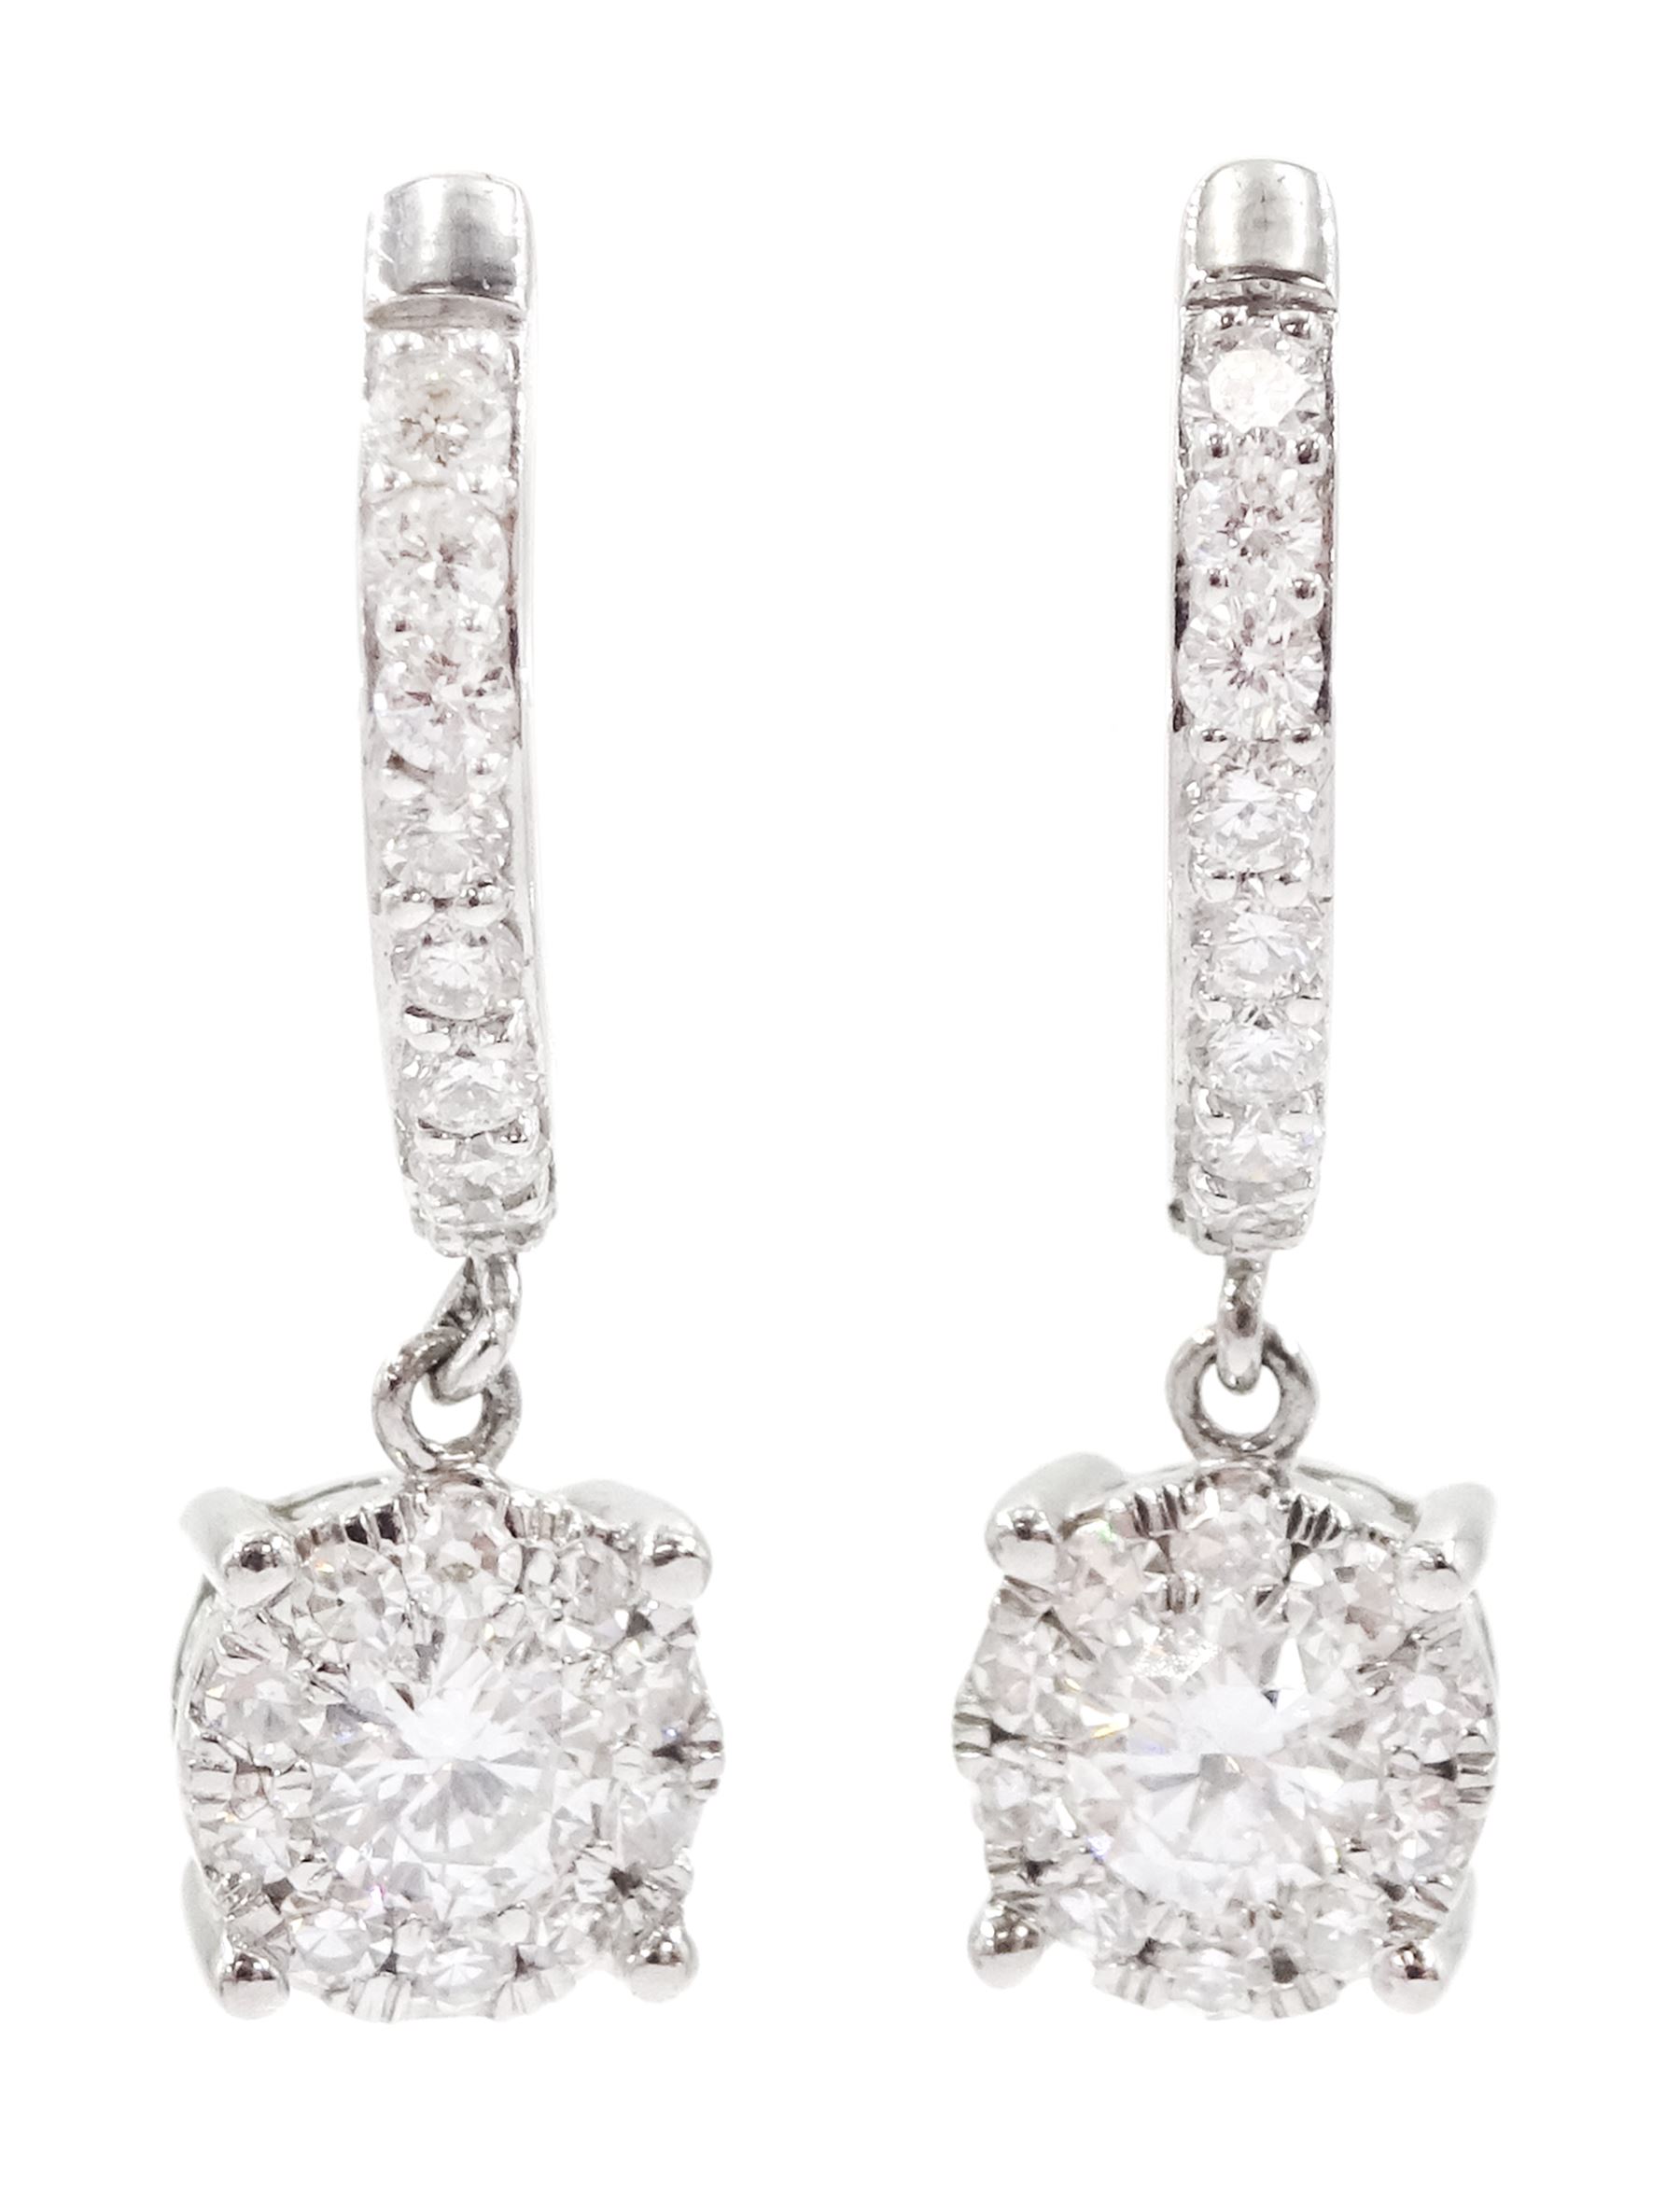 Pair of 18ct white gold round brilliant cut diamond pendant earrings